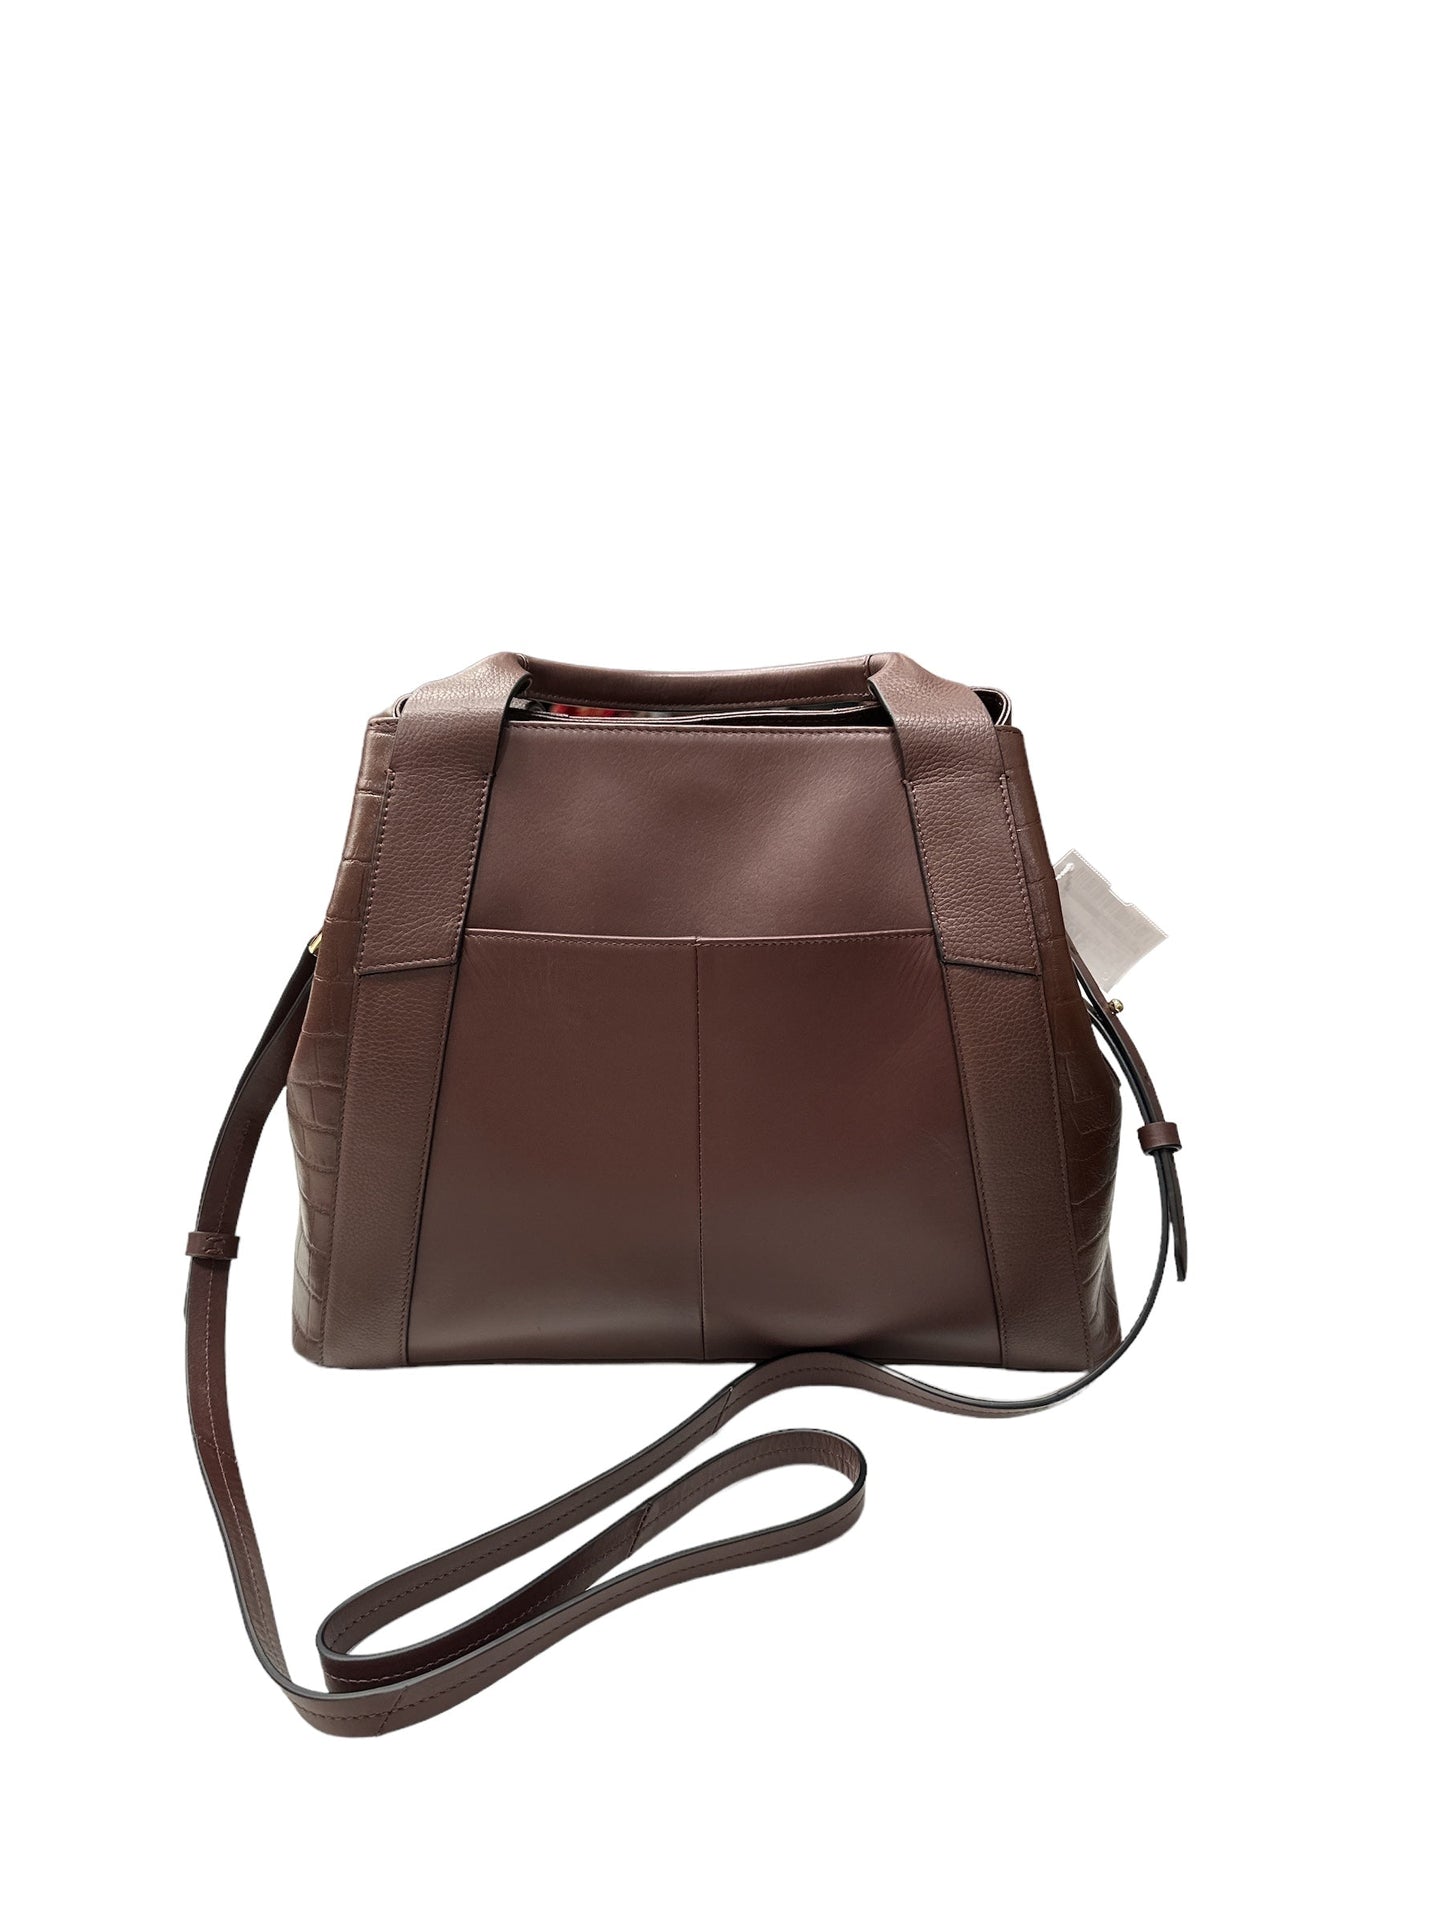 Handbag Leather By Radley London  Size: Large